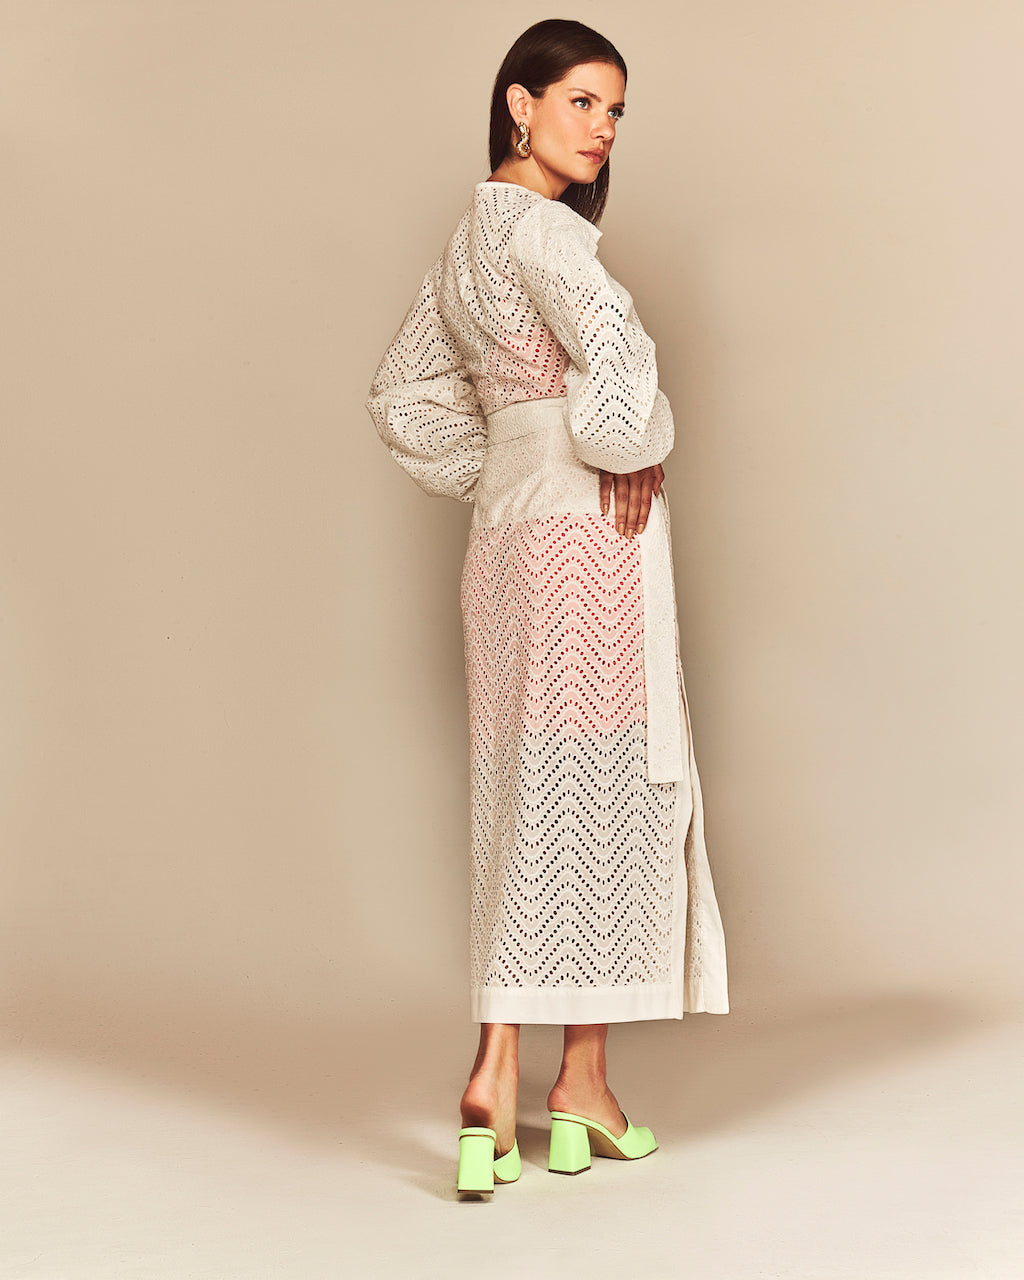 Ada Long Sleeve Maxi Dress - White